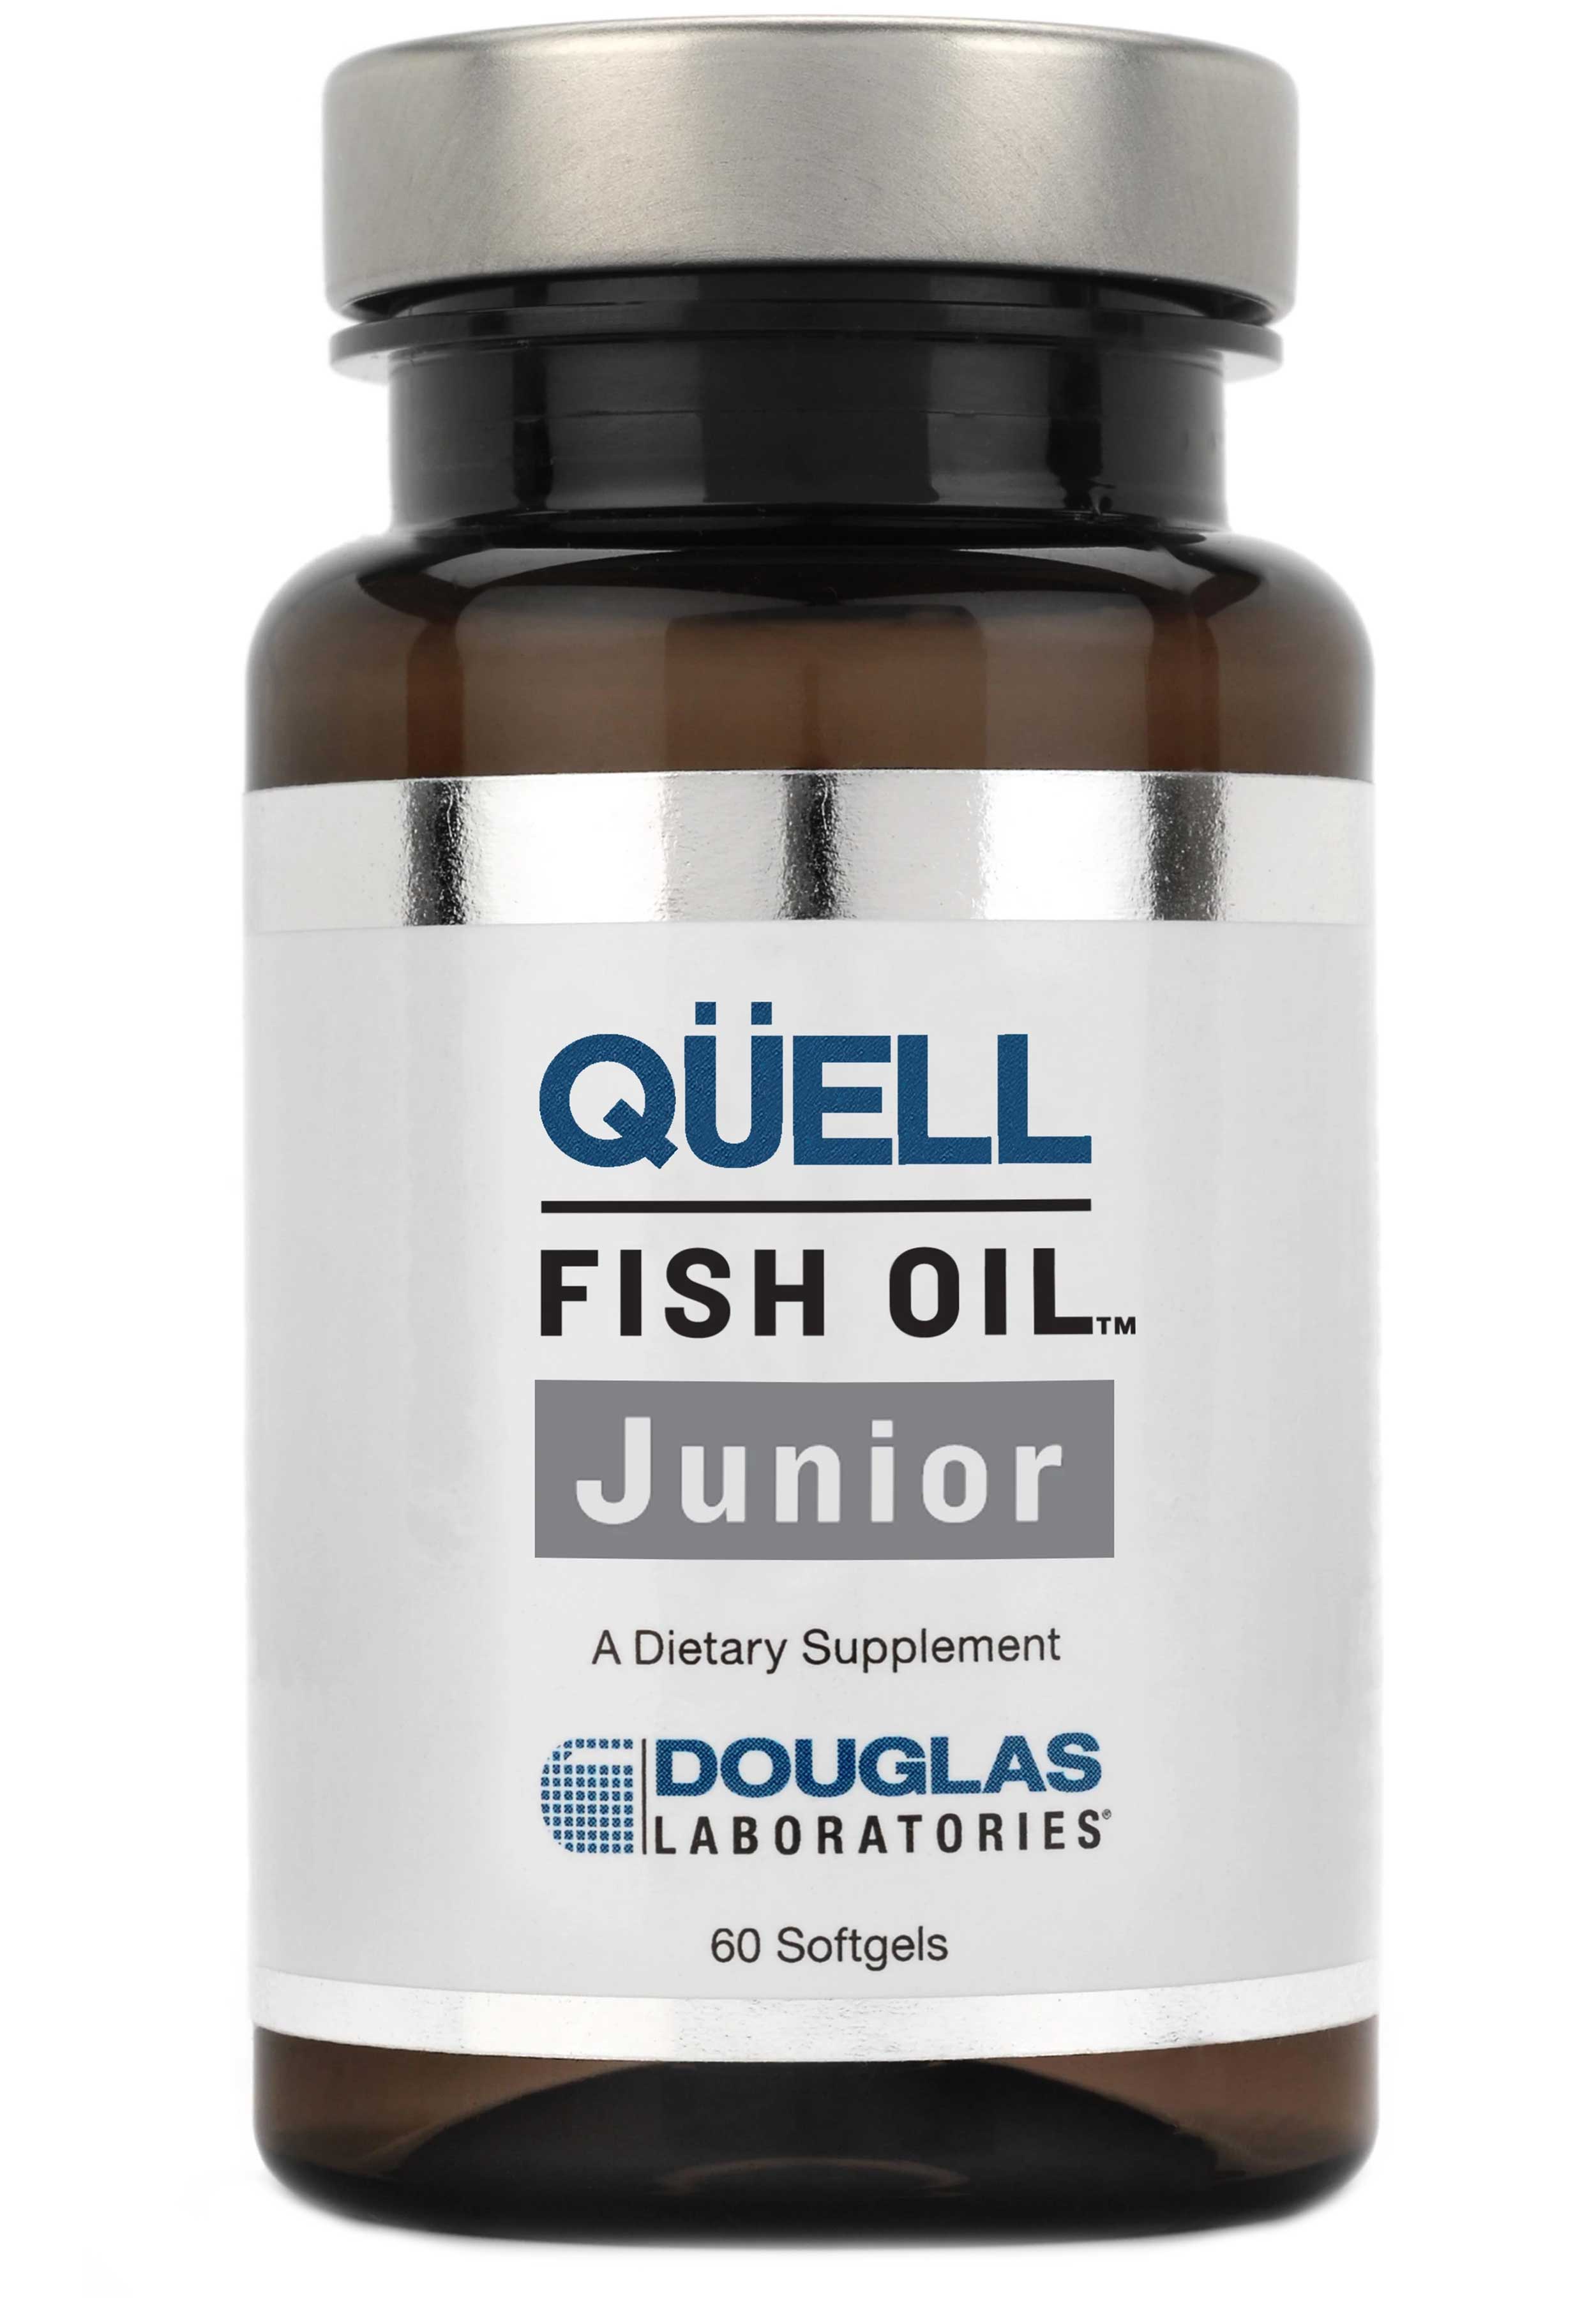 Douglas Laboratories QUELL Fish Oil - Junior